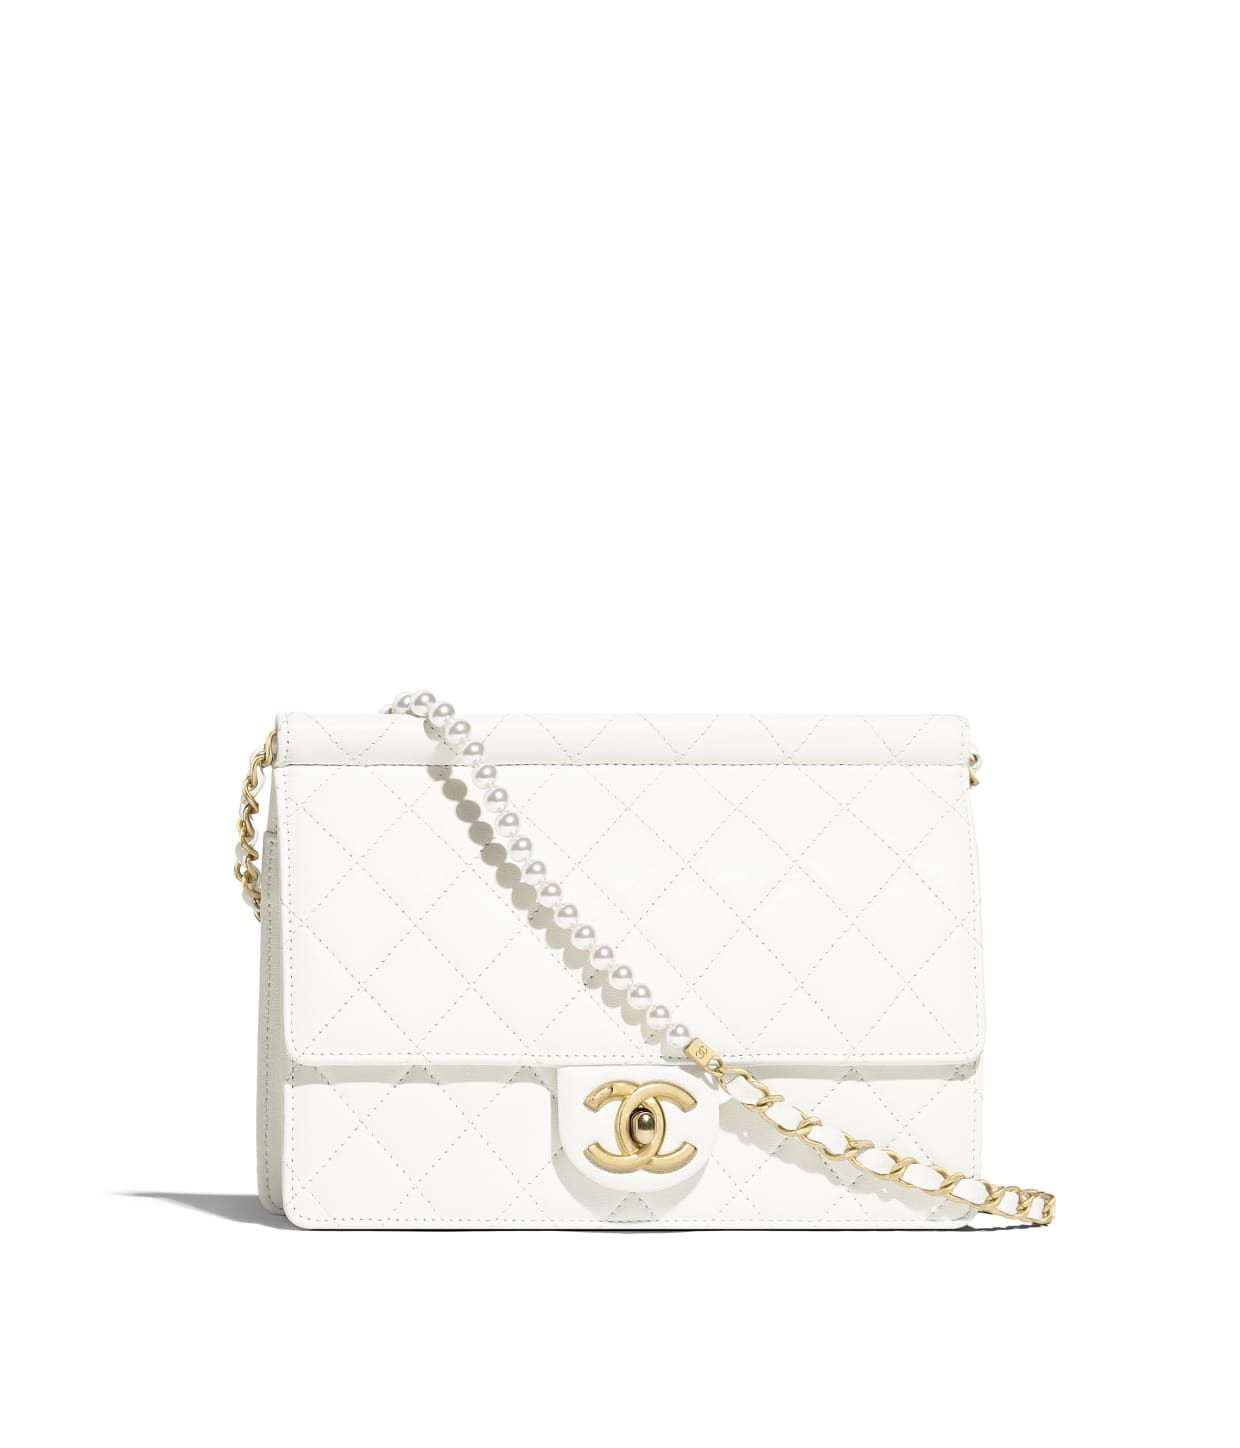 Lambskin, Imitation Pearls & Gold-Tone Metal White Flap Bag | CHANEL | Chanel, Inc. (US)